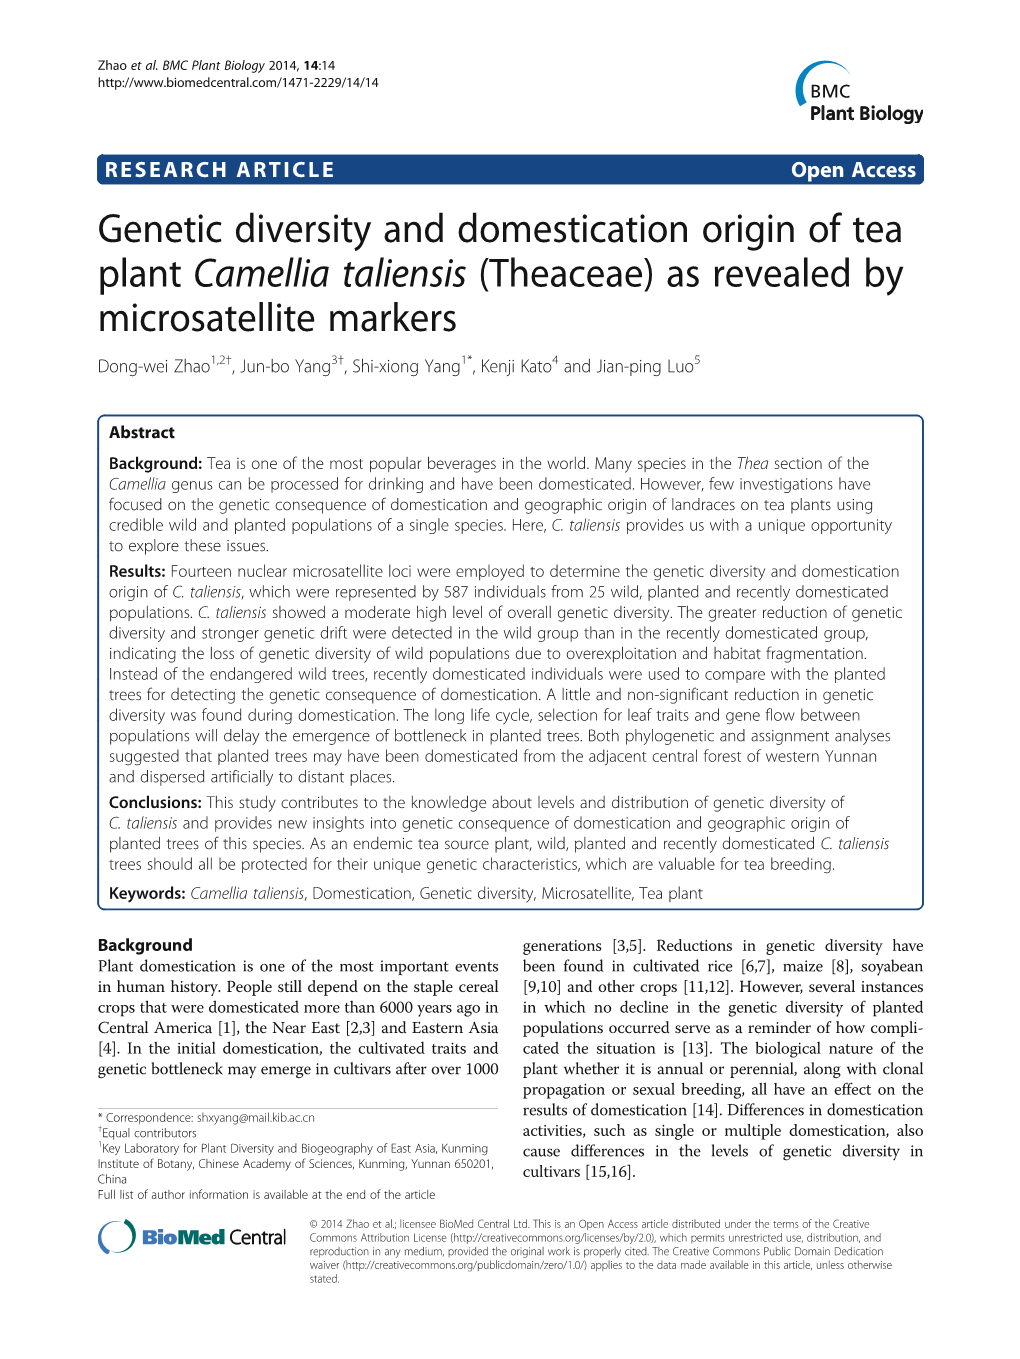 Genetic Diversity and Domestication Origin of Tea Plant Camellia Taliensis